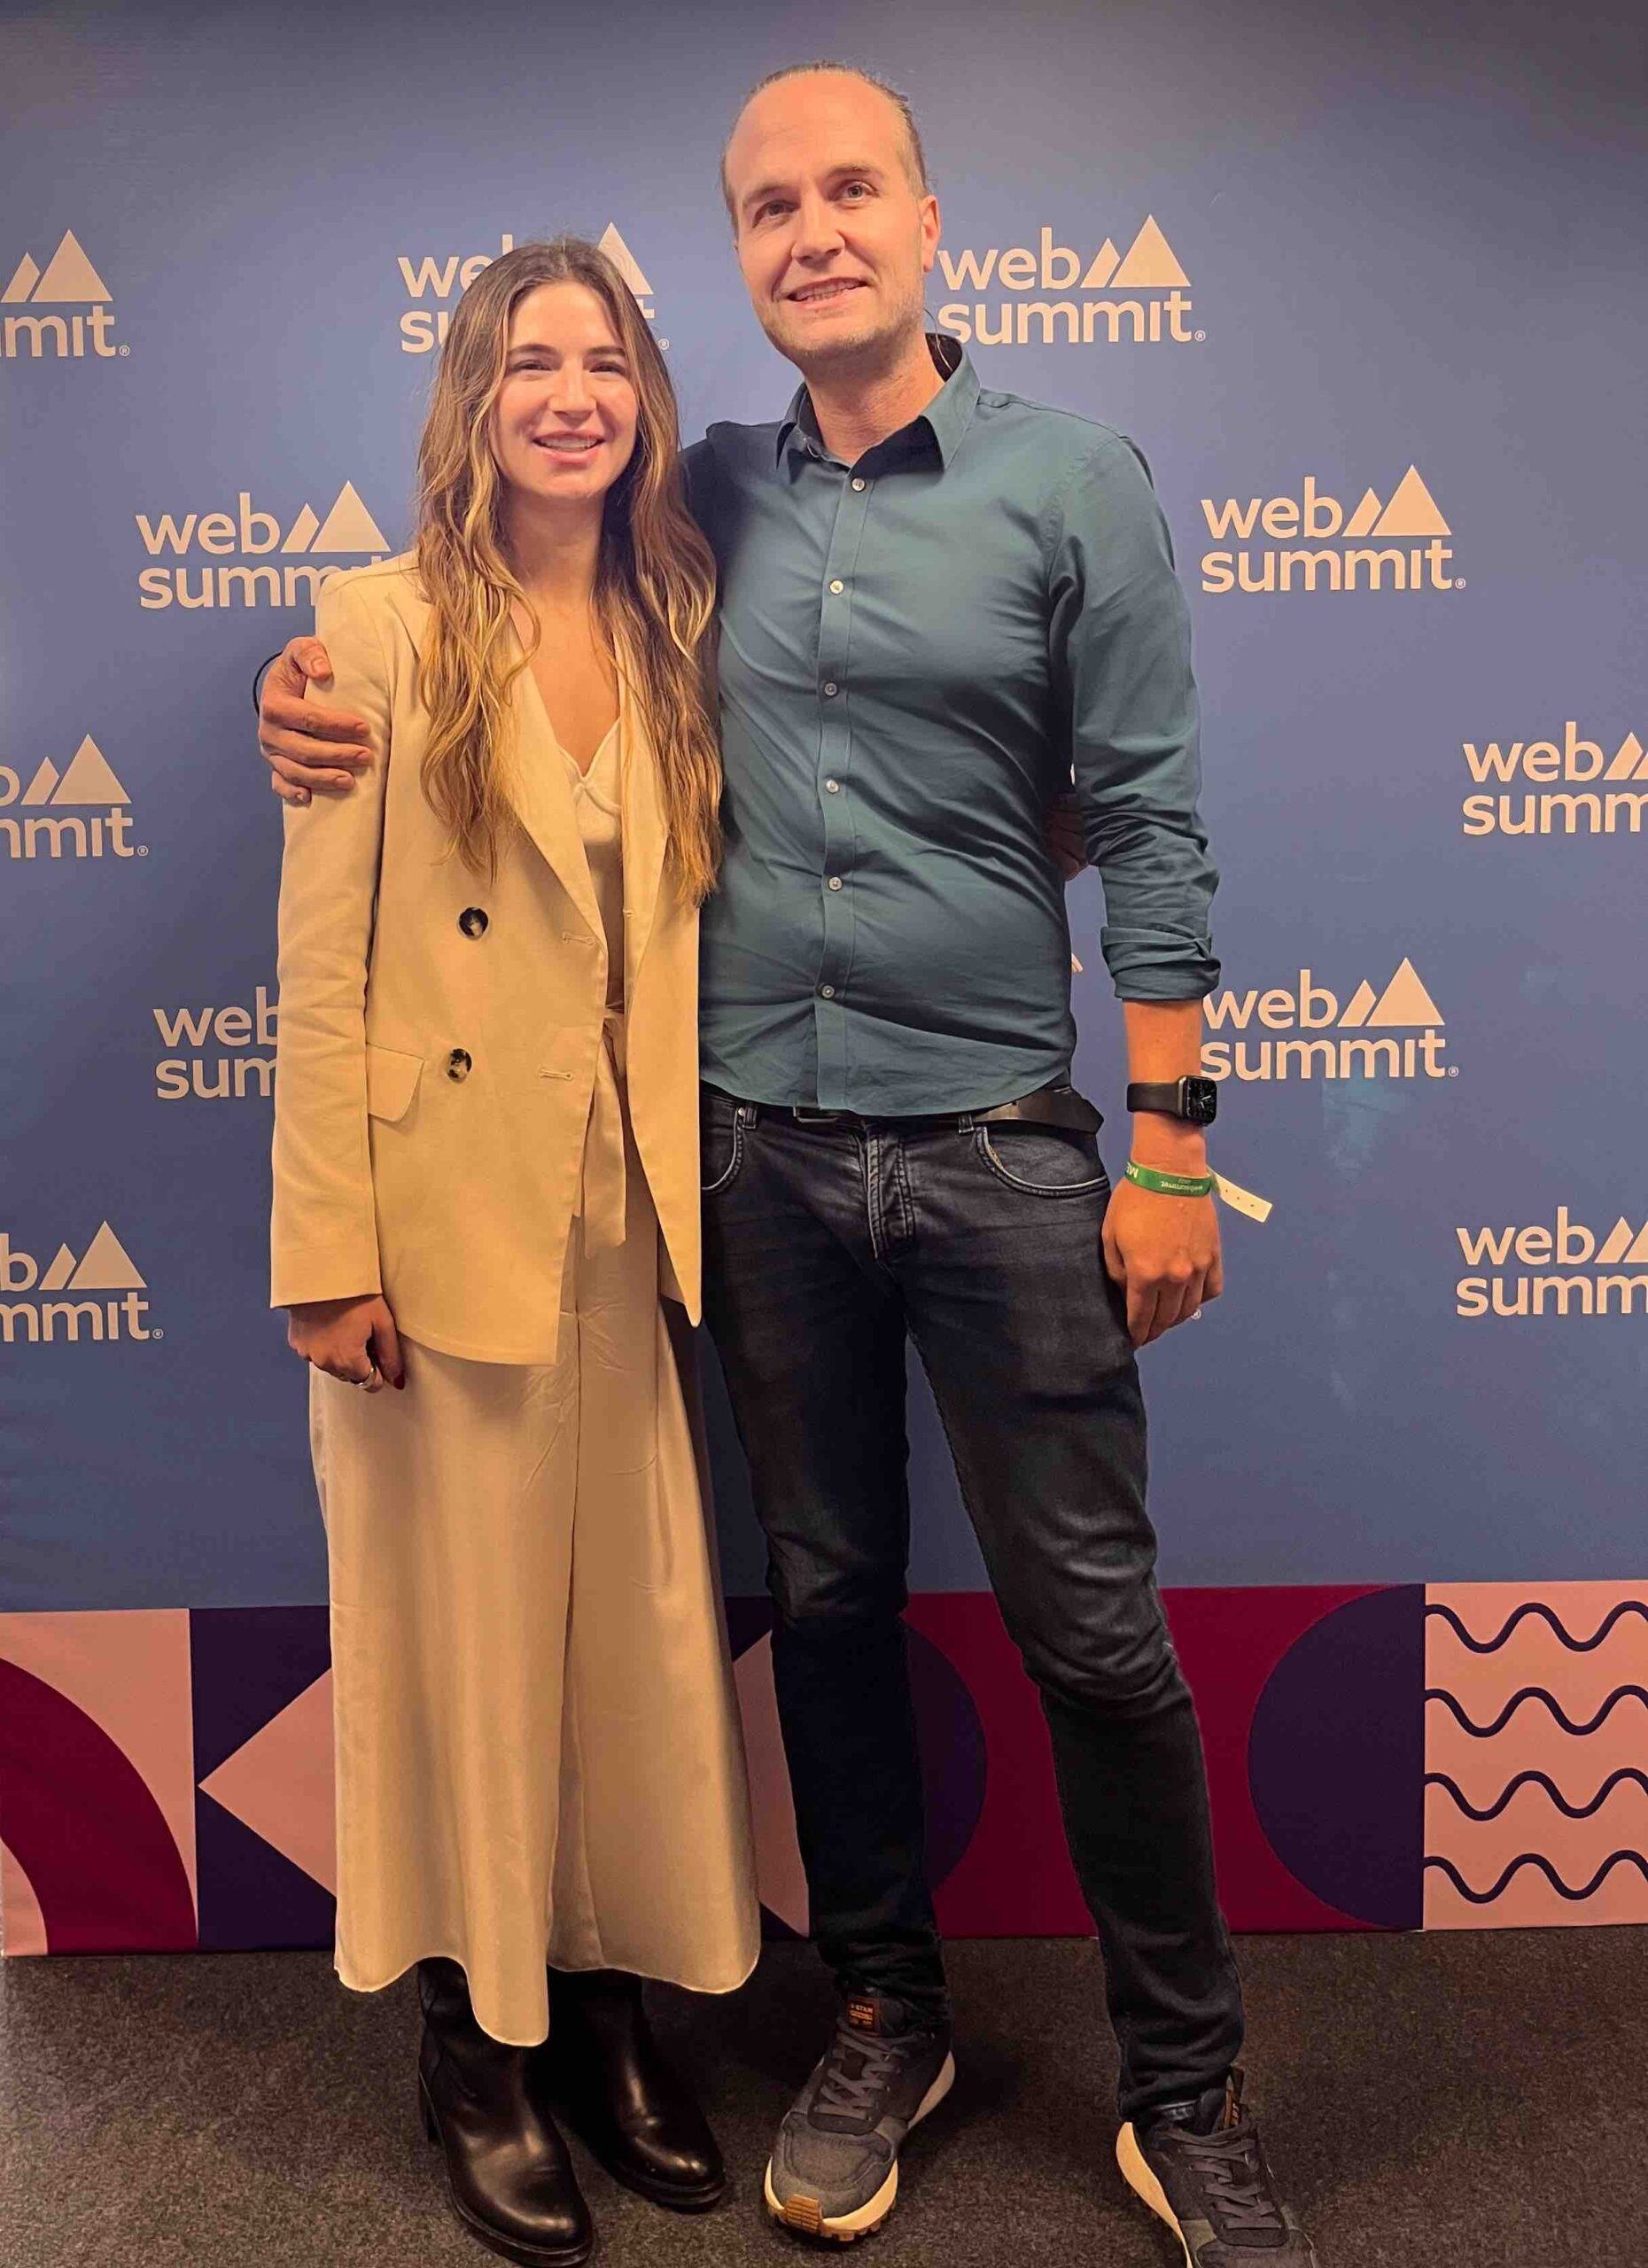 Amanda Cassatt and Joeri Billast at Web Summit